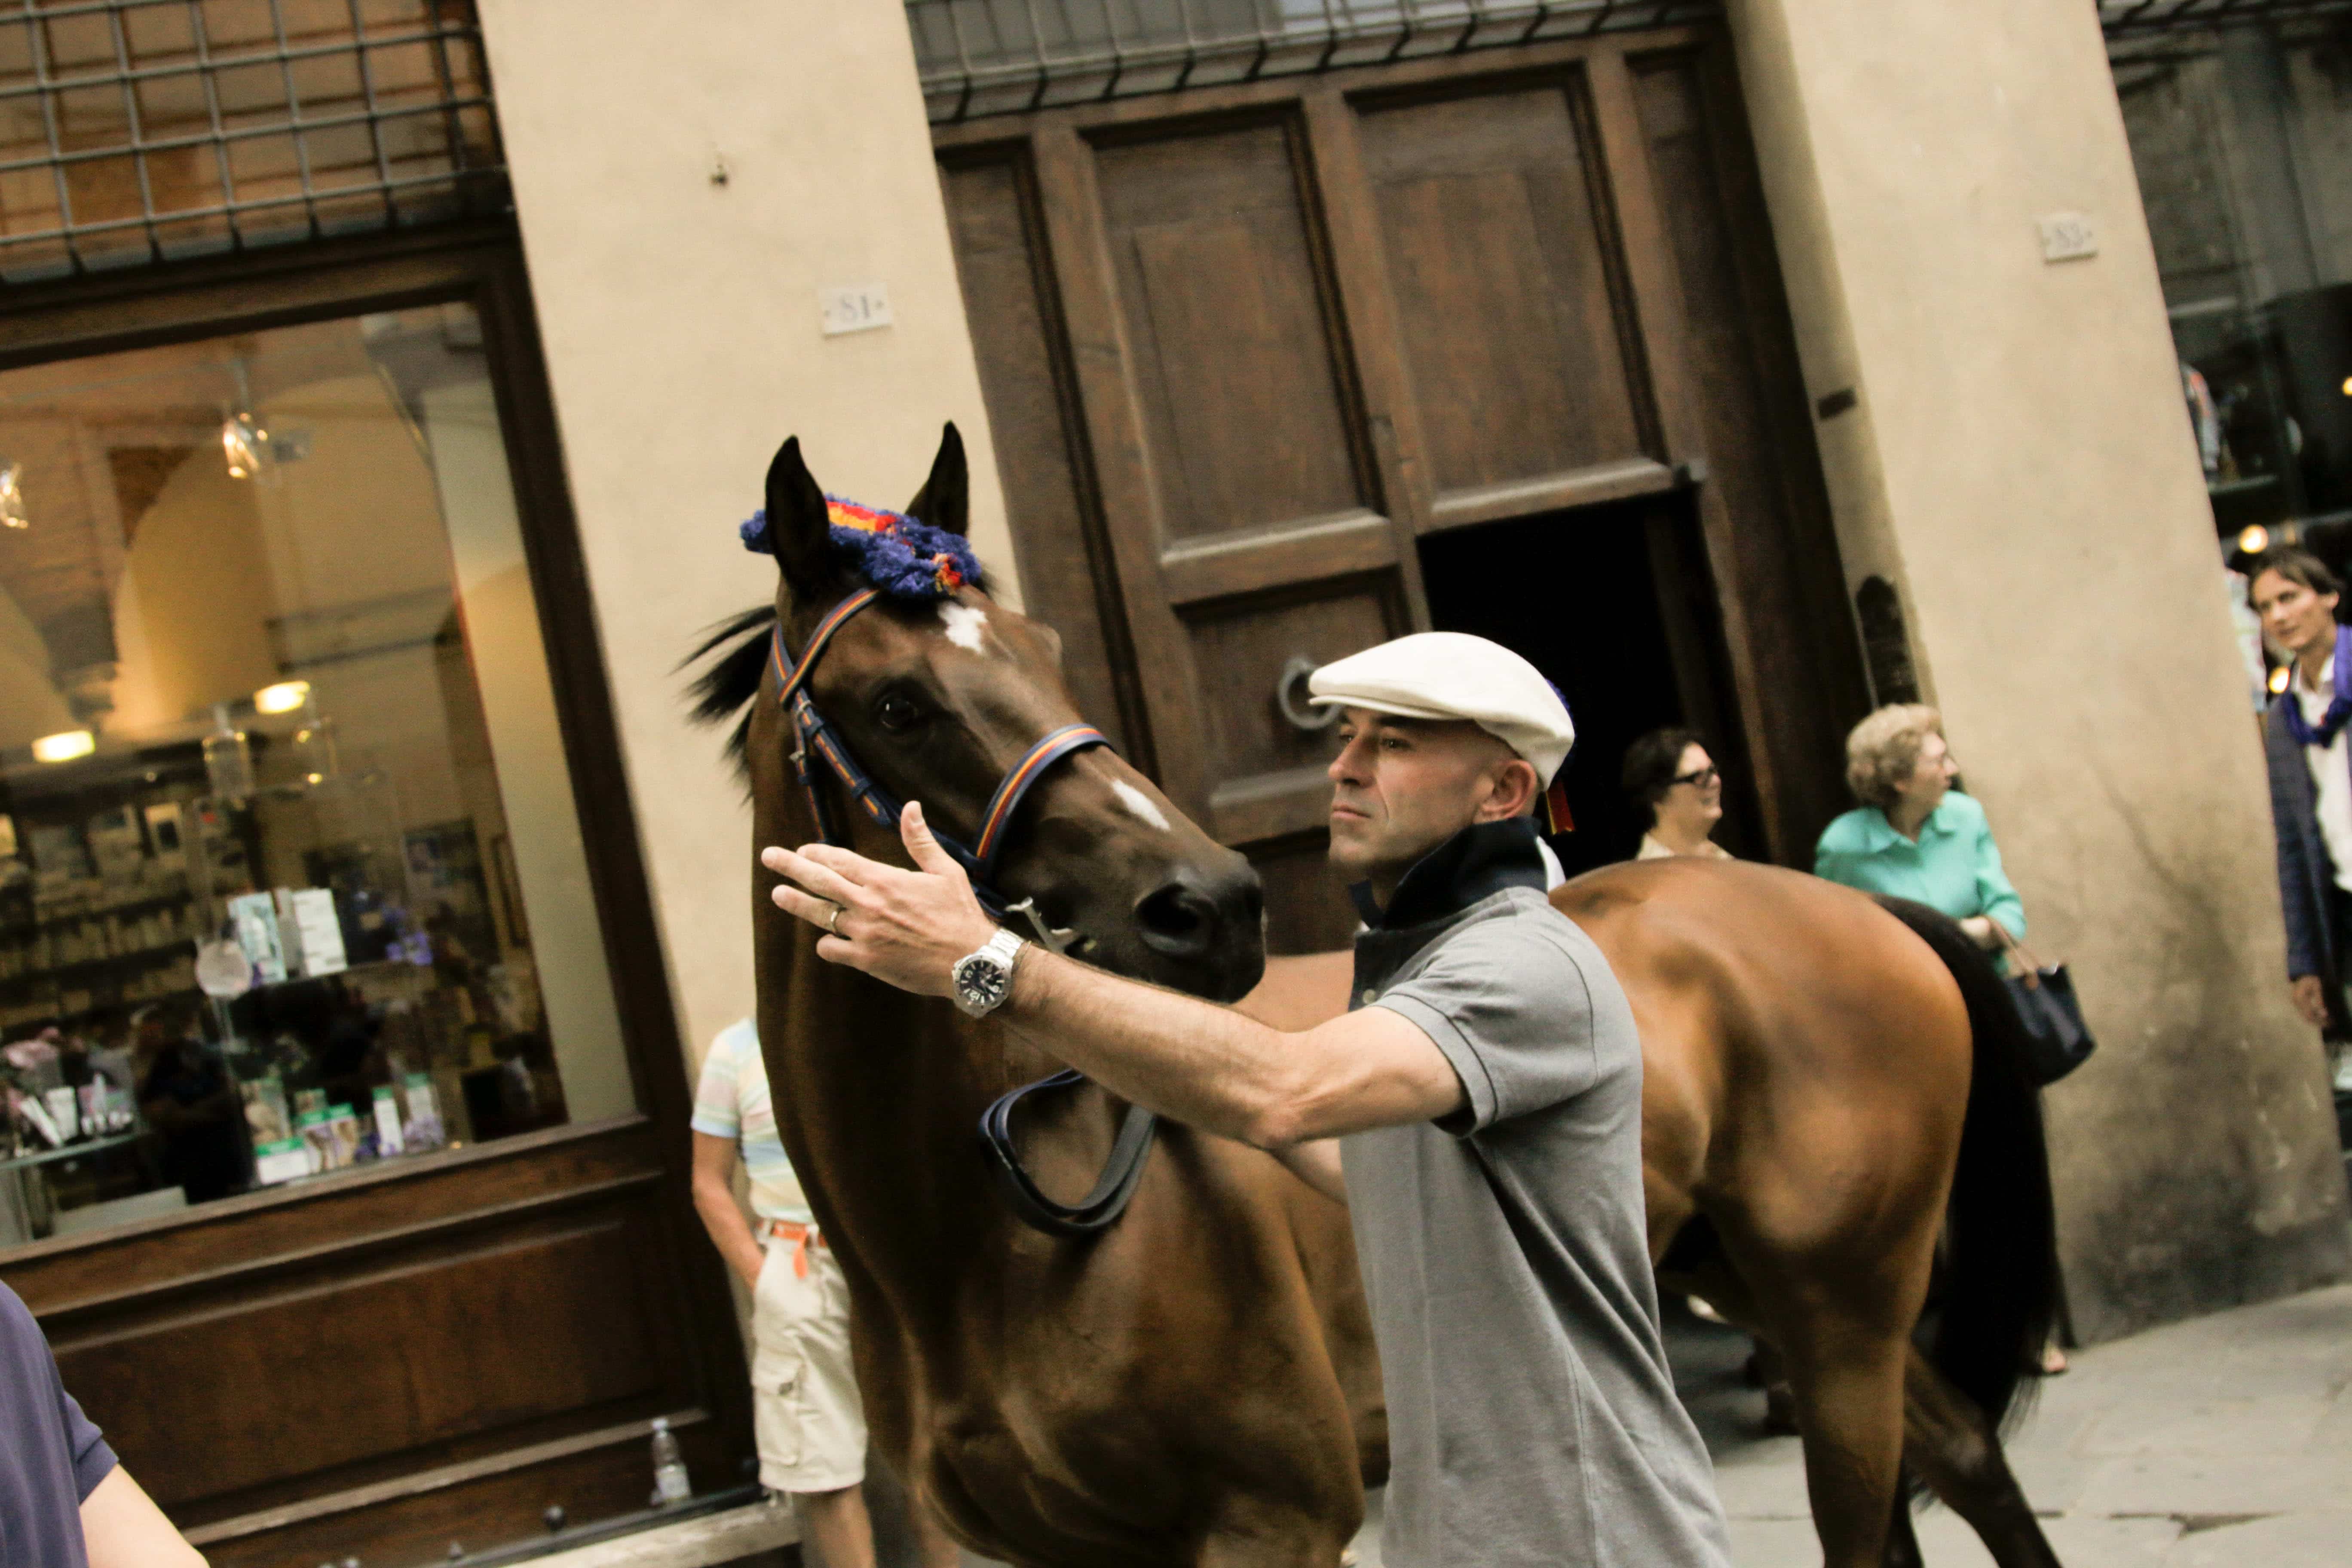 Jockeys lead their horses through the streets of Siena. Photo Credit: Jeffrey Lei